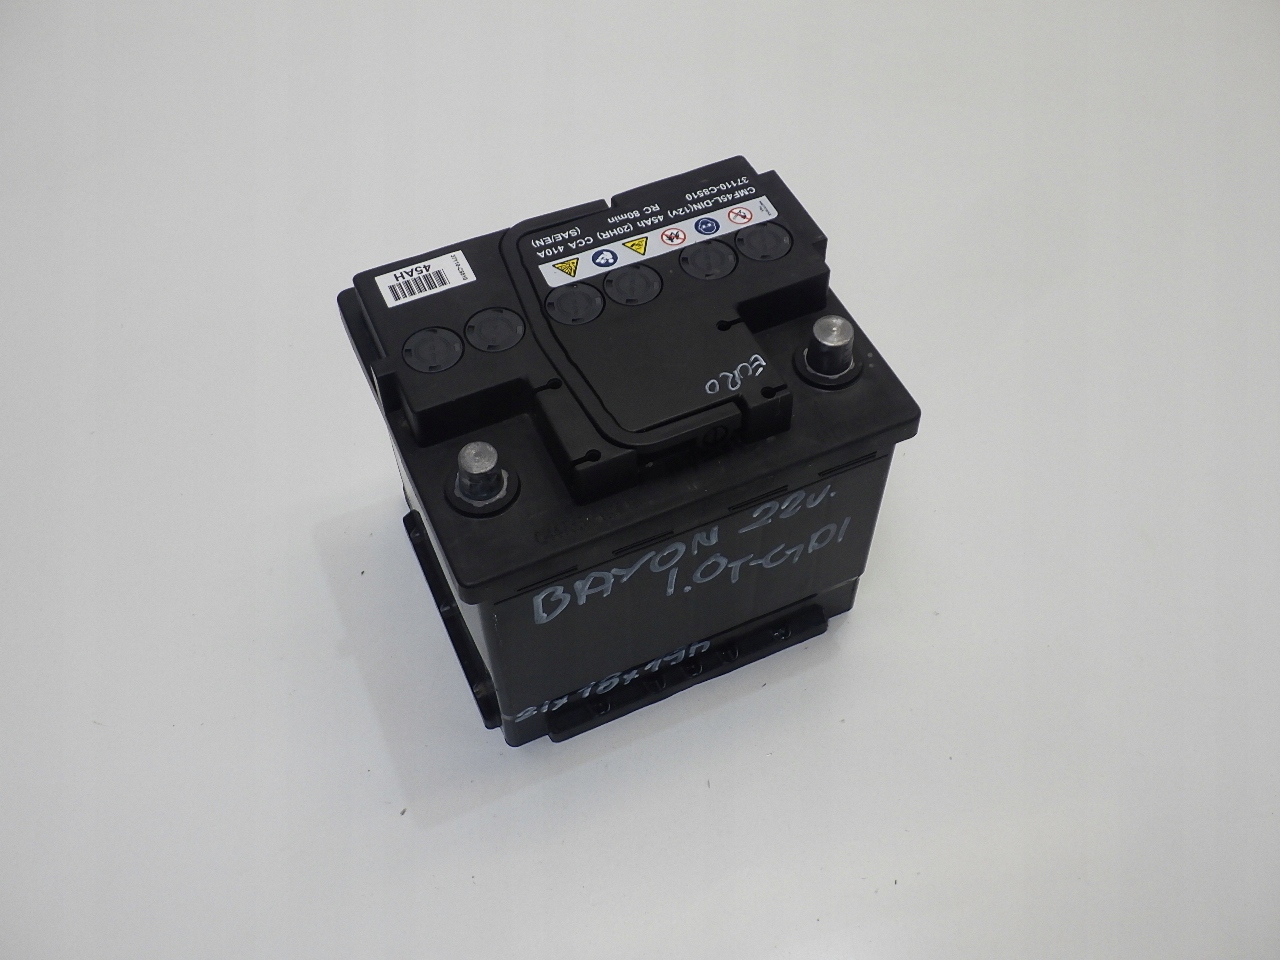 ORIGINAL GM Opel Autobatterie Starterbatterie 12V 70Ah 750 CCA EN 95530793